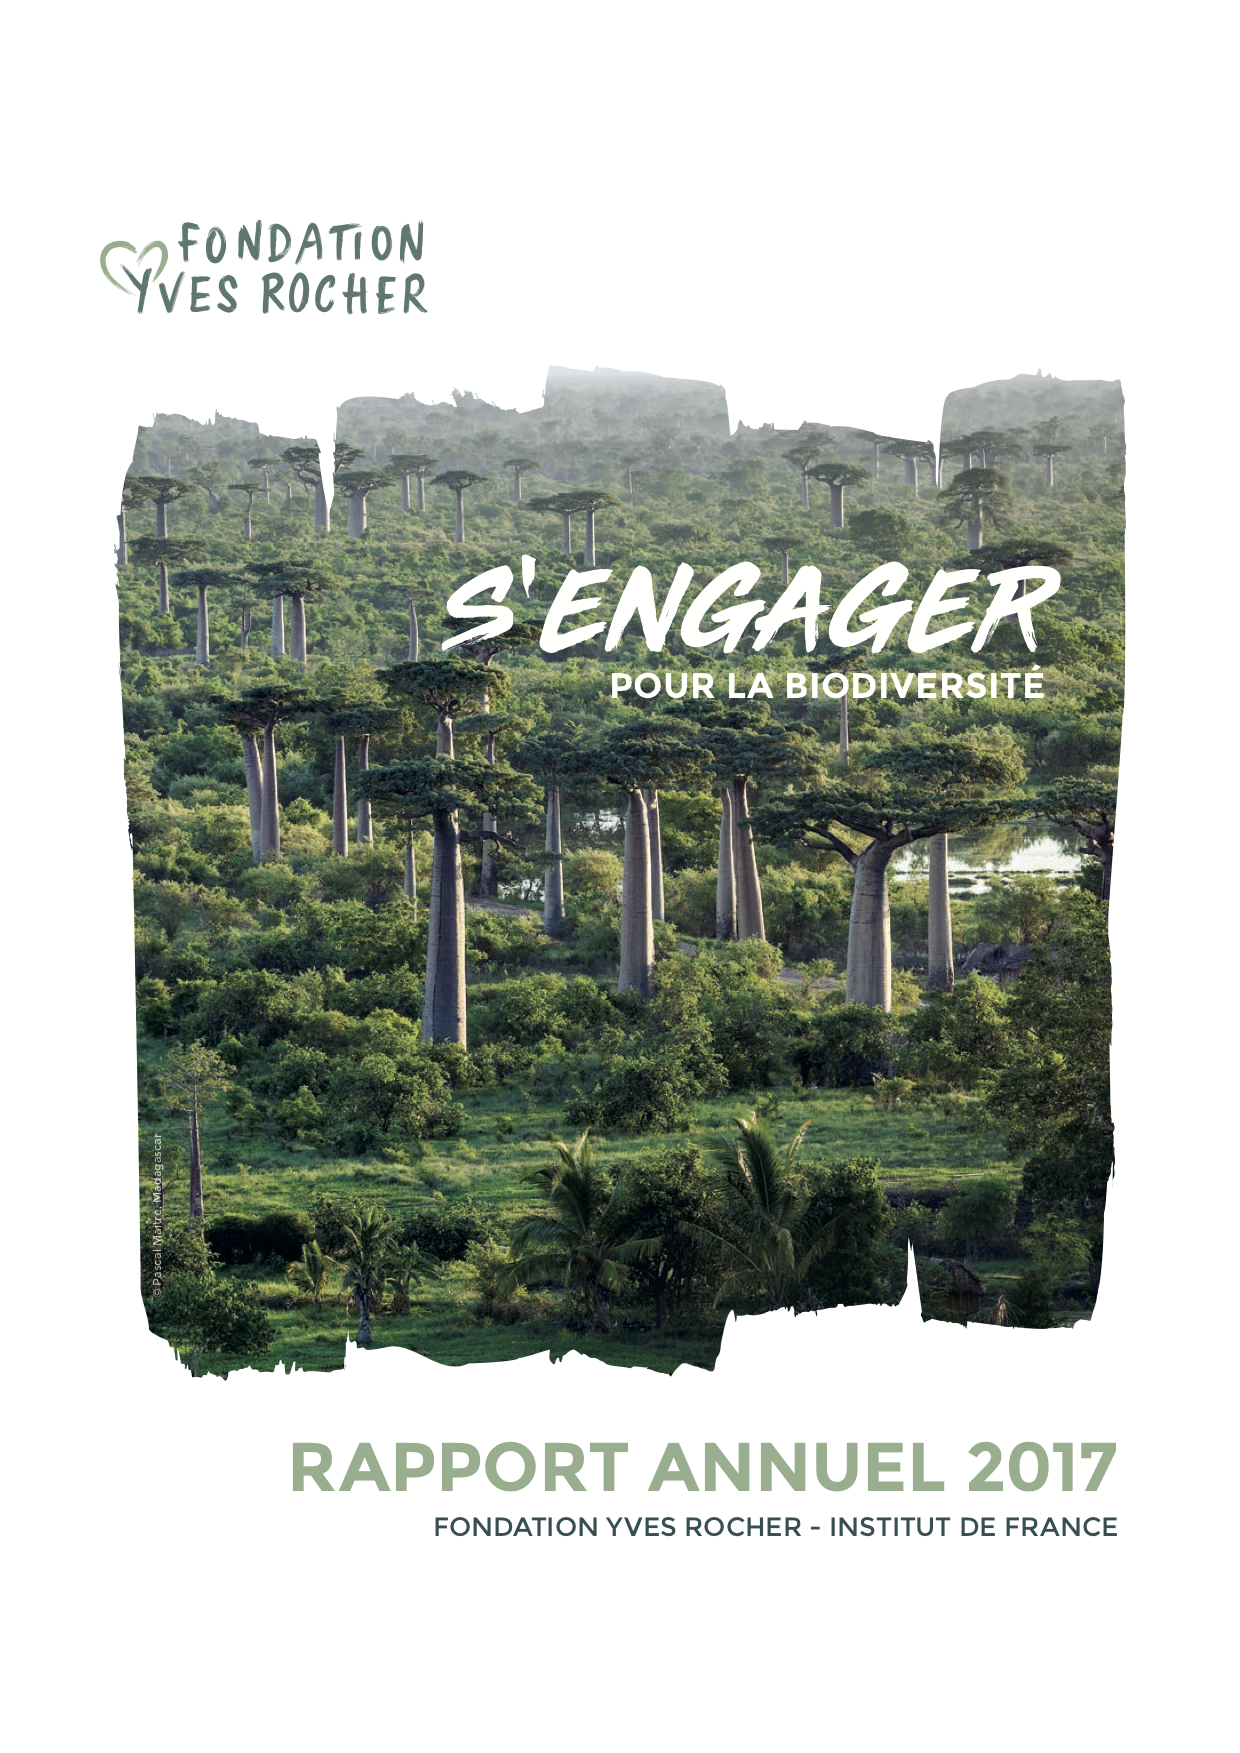 Fondation Yves Rocher - Rapport annuel 2017